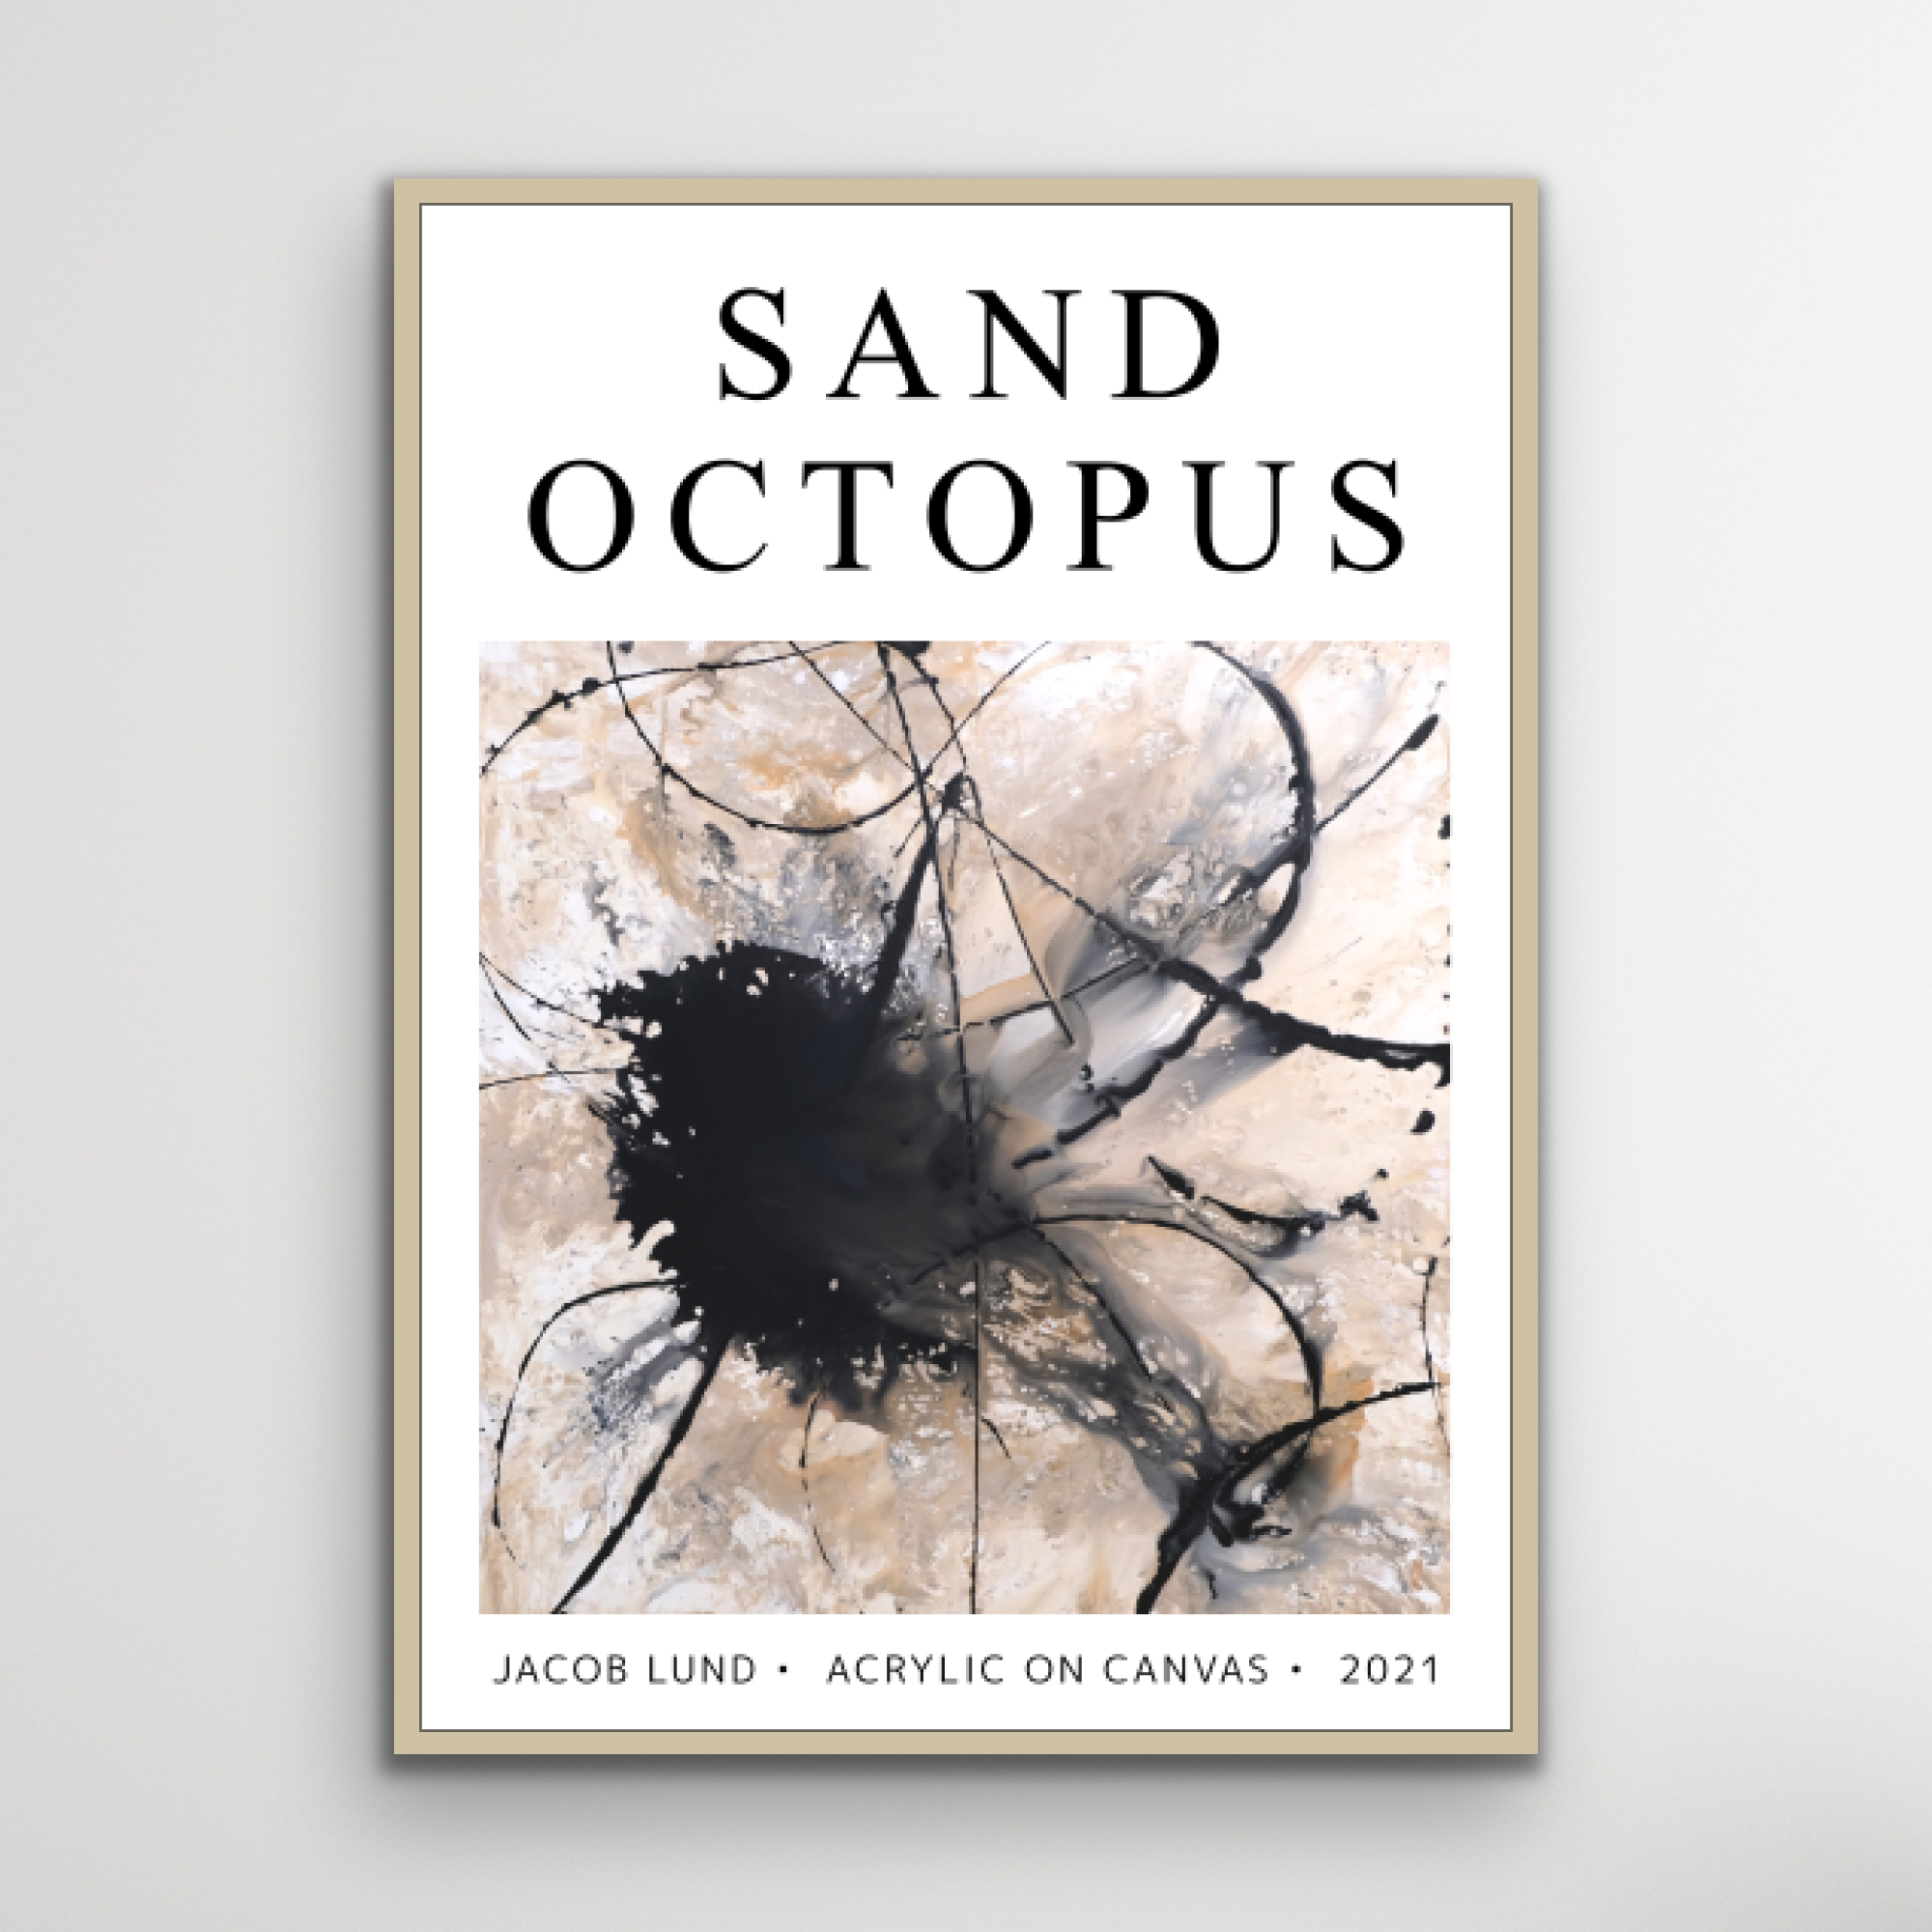 Plakat: "Sand Octopus" (hvid baggrund)